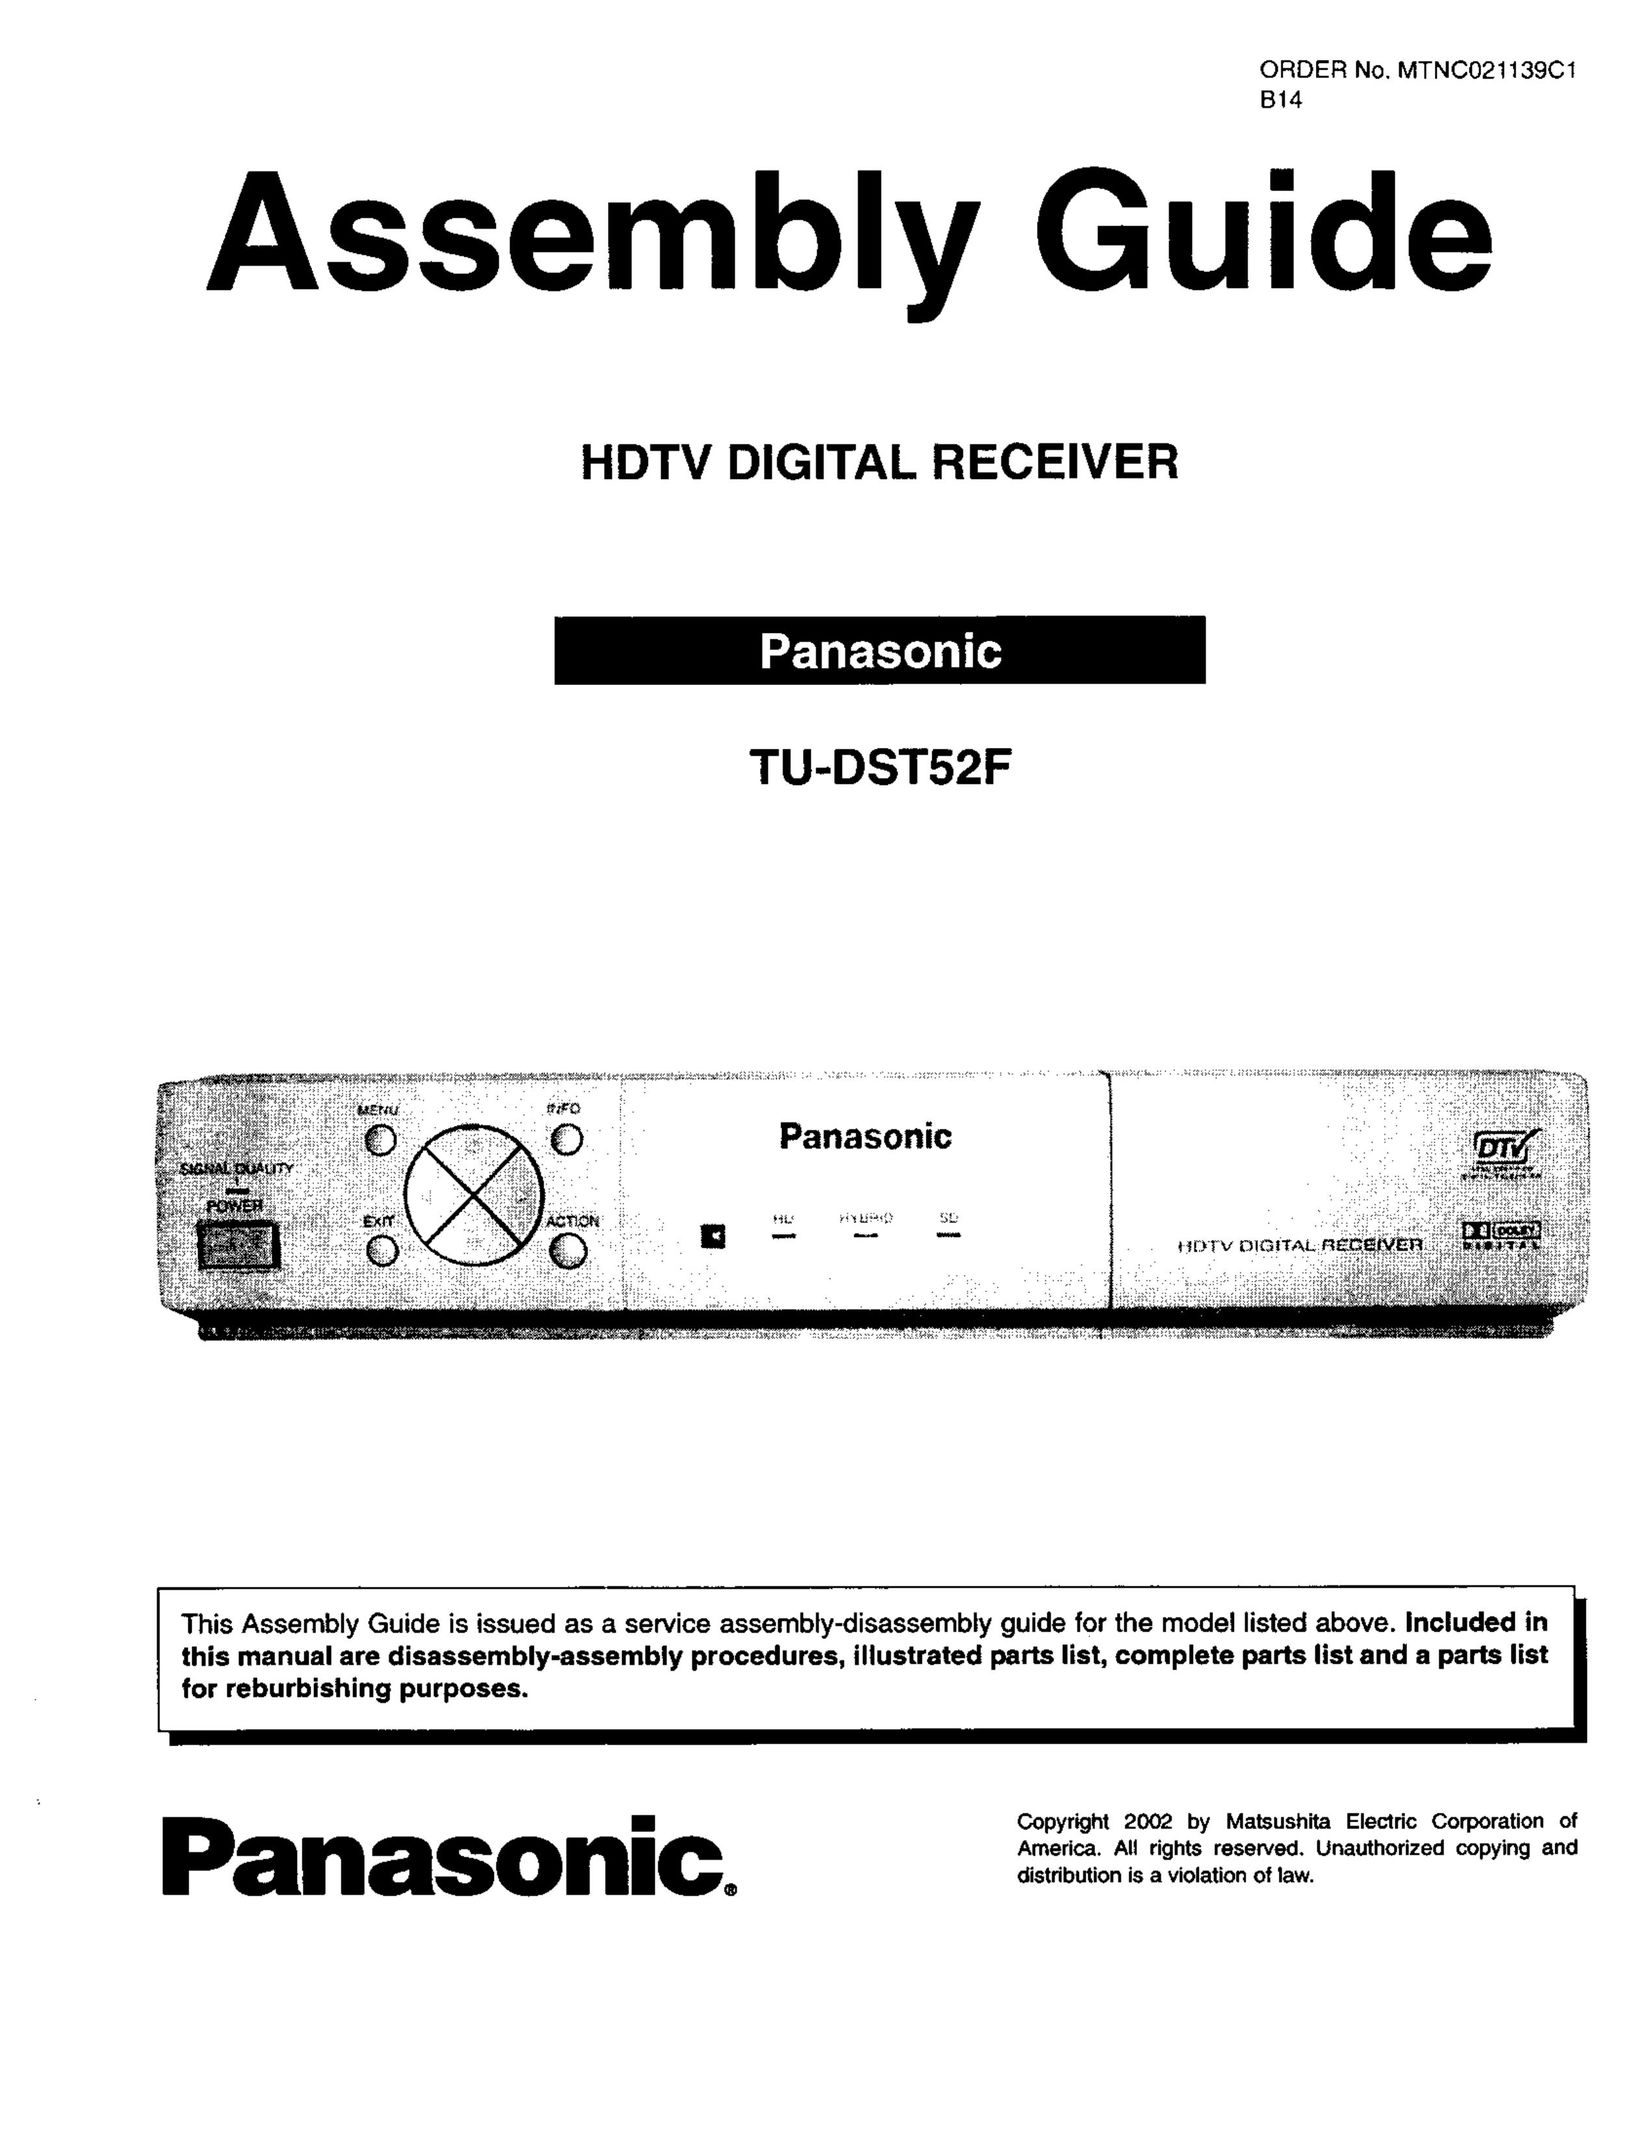 Panasonic TU-DST52F TV Receiver User Manual